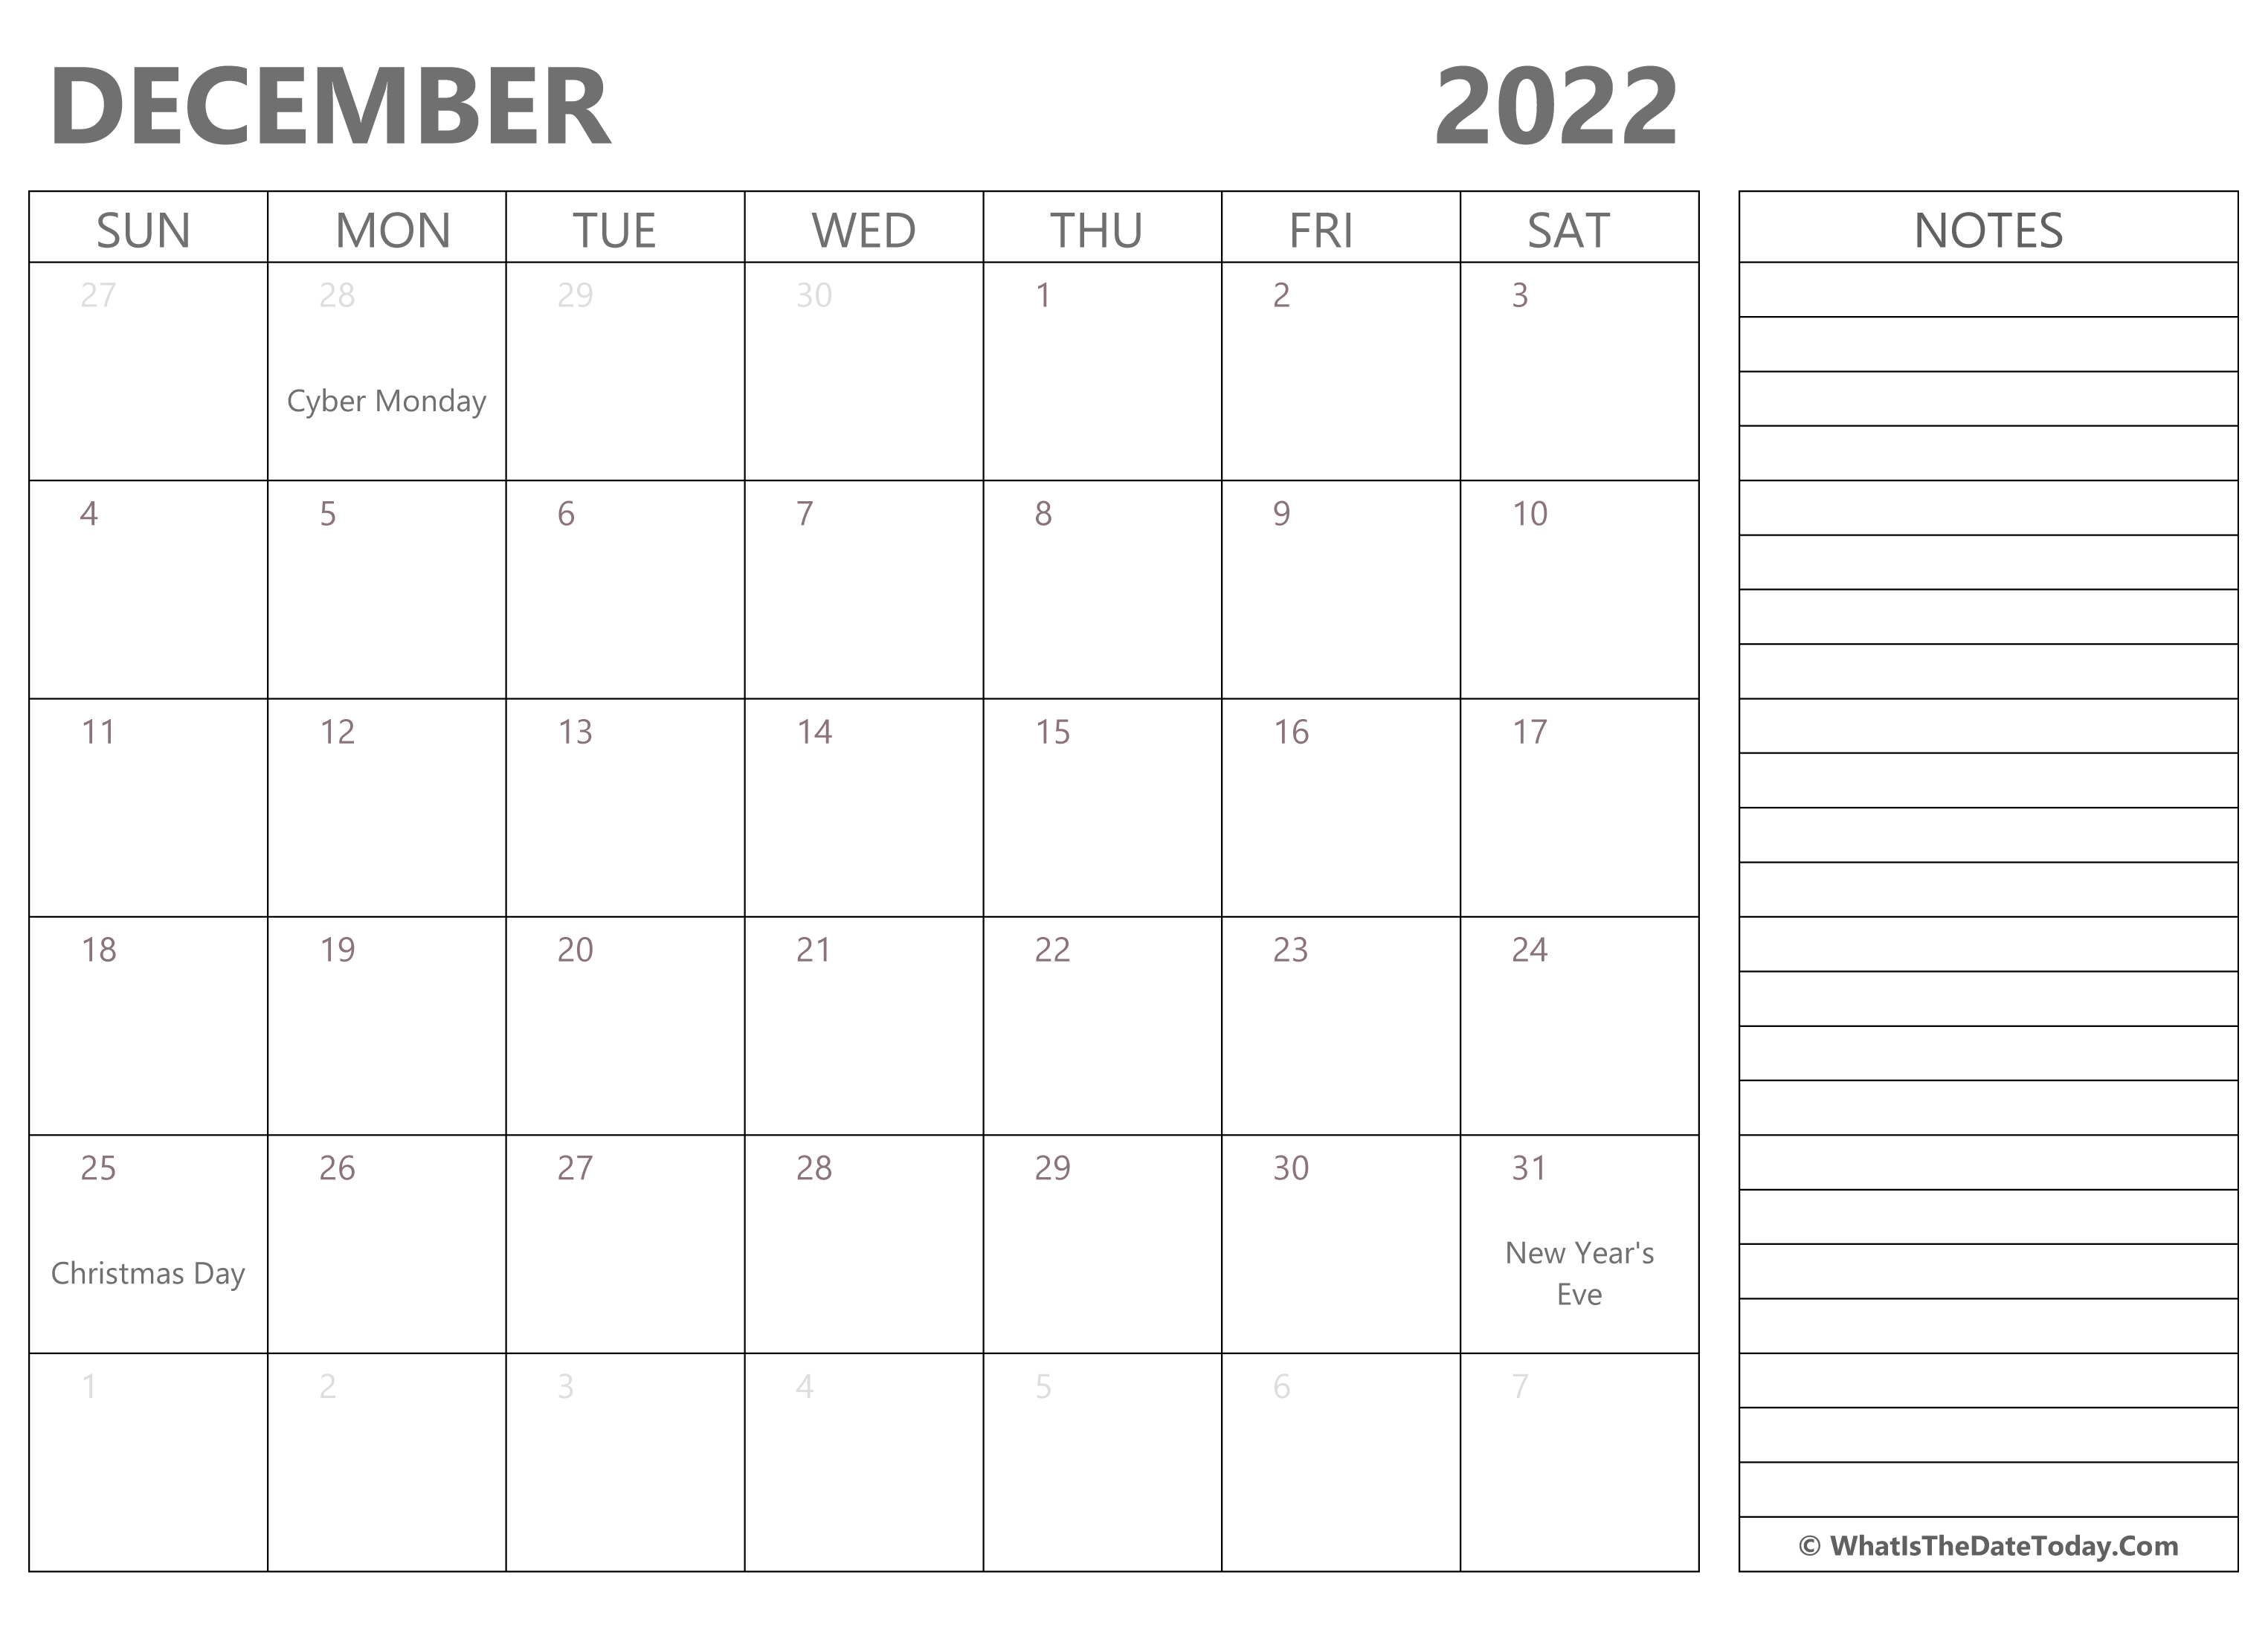 Editable Calendar December 2022 Editable December 2022 Calendar With Holidays And Notes |  Whatisthedatetoday.com